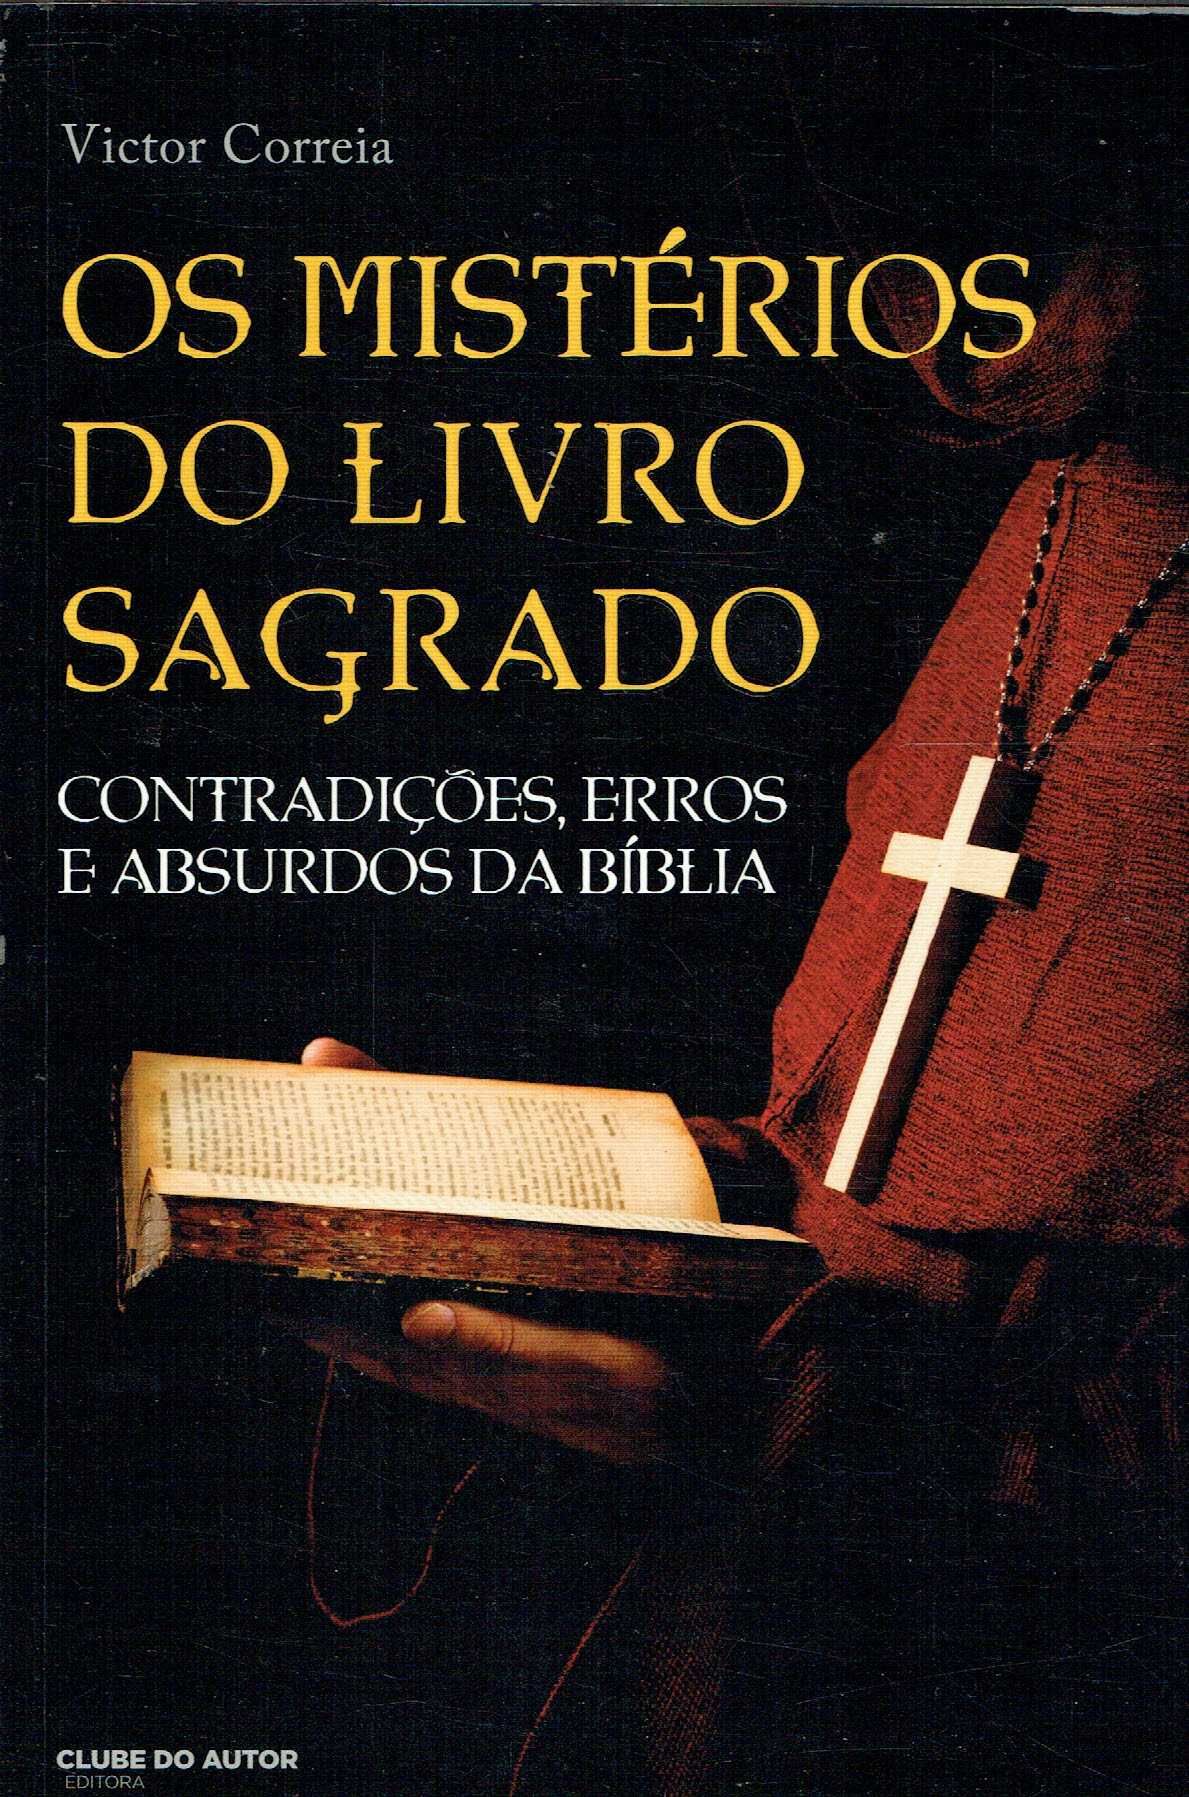 15275

Os Mistérios do Livro Sagrado
de Victor Correia